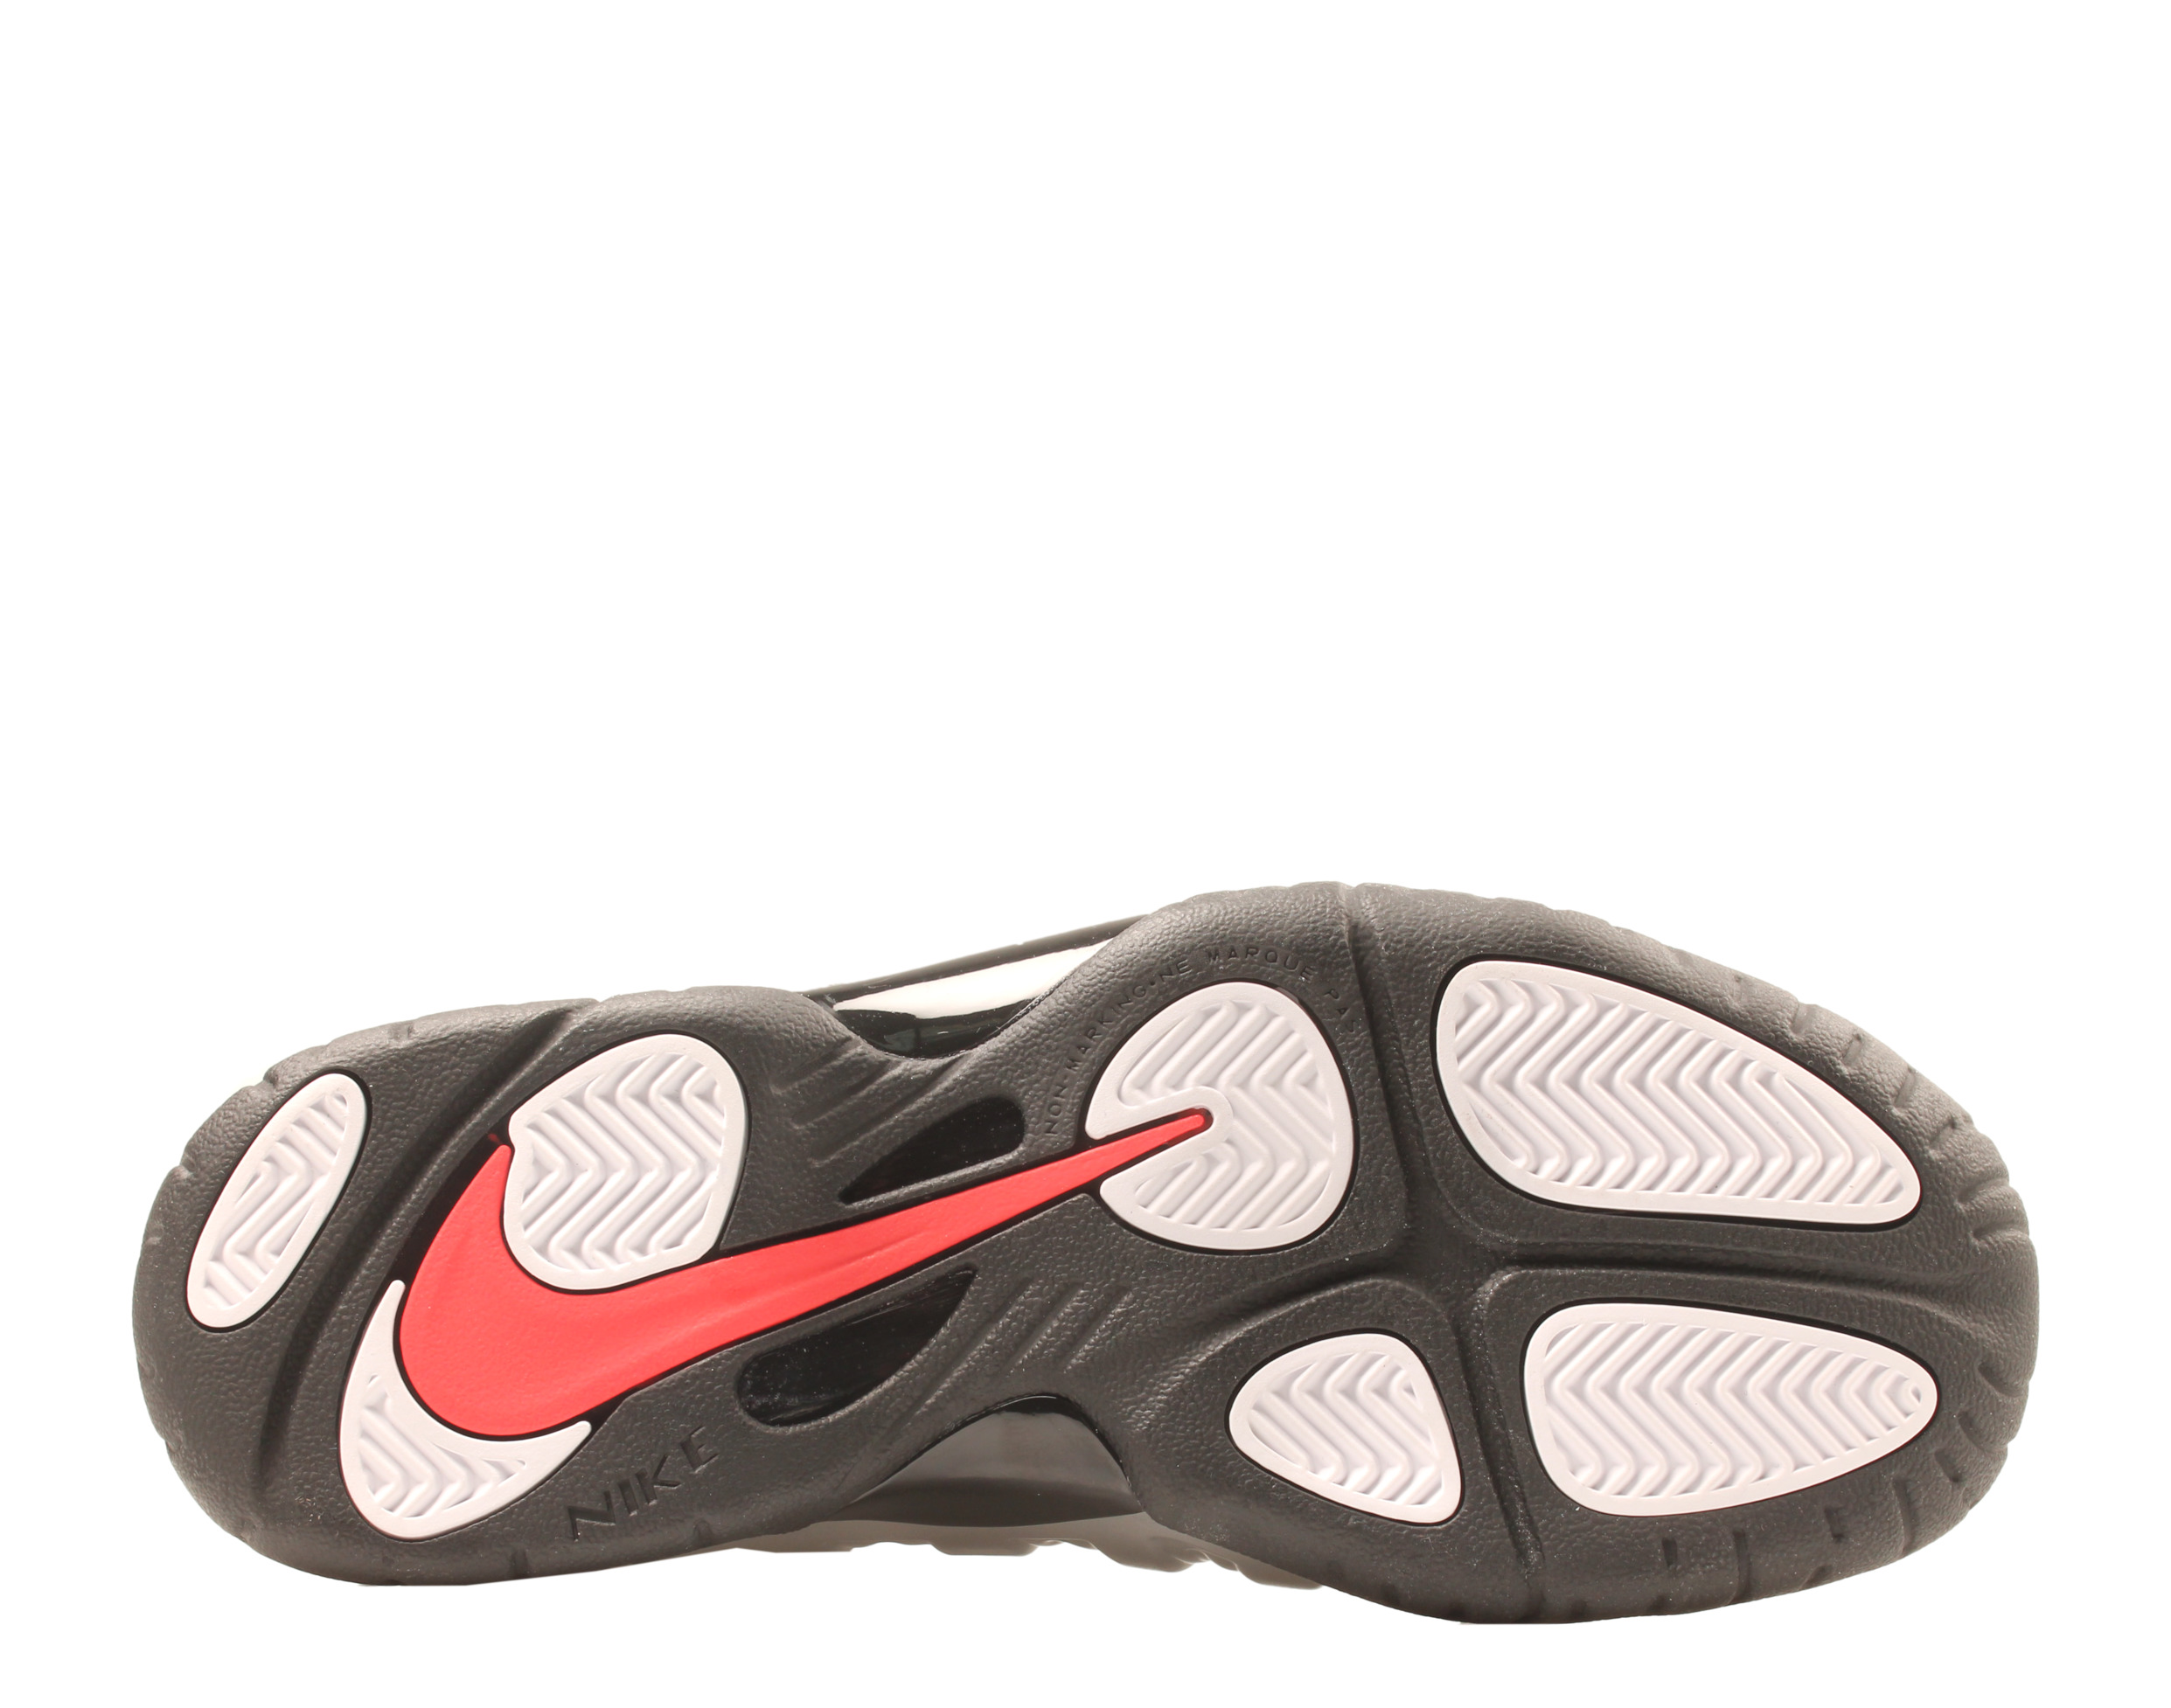 Nike Little Posite One KSA GS Big Kids Basketball Shoes Size 4.5 - image 5 of 6